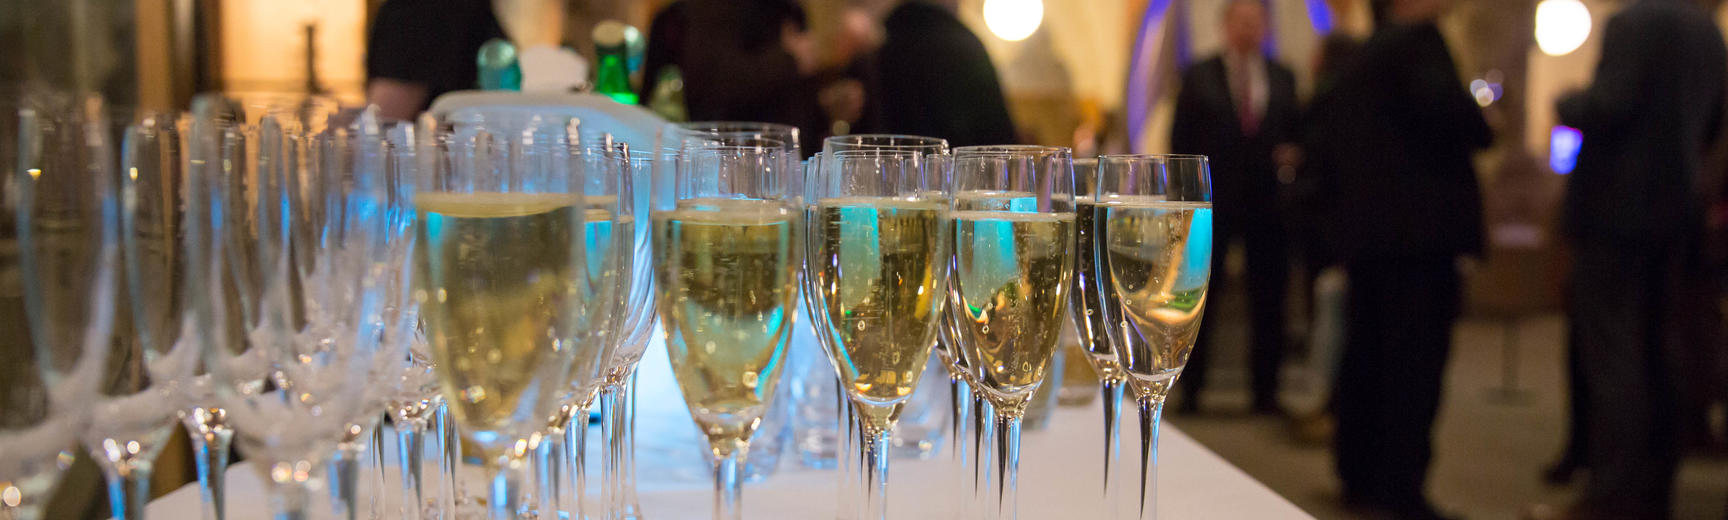 events  champagne glasses